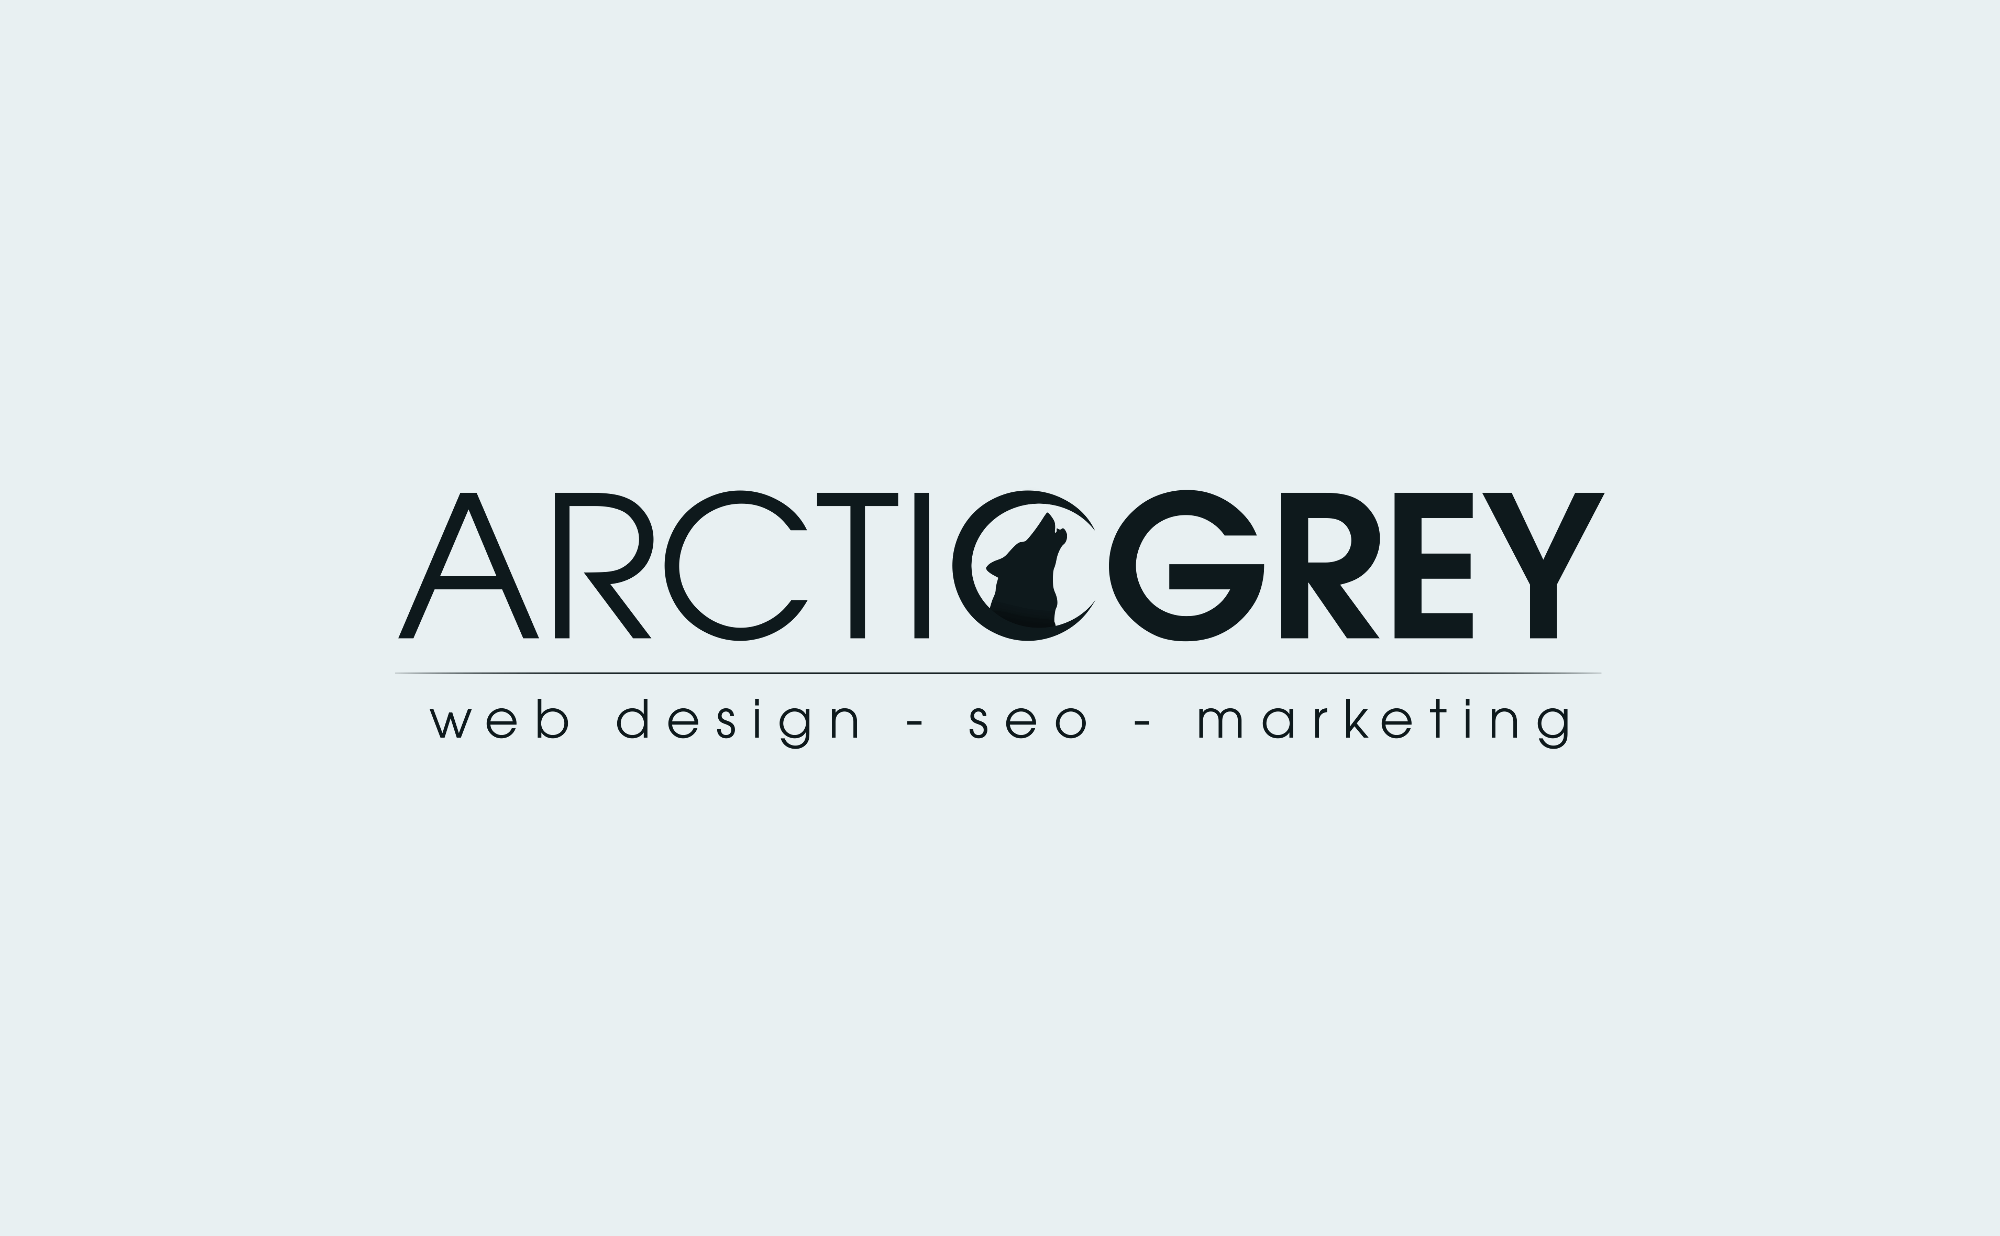 Best SEO Web Design Company Logo: Arctic Grey Inc